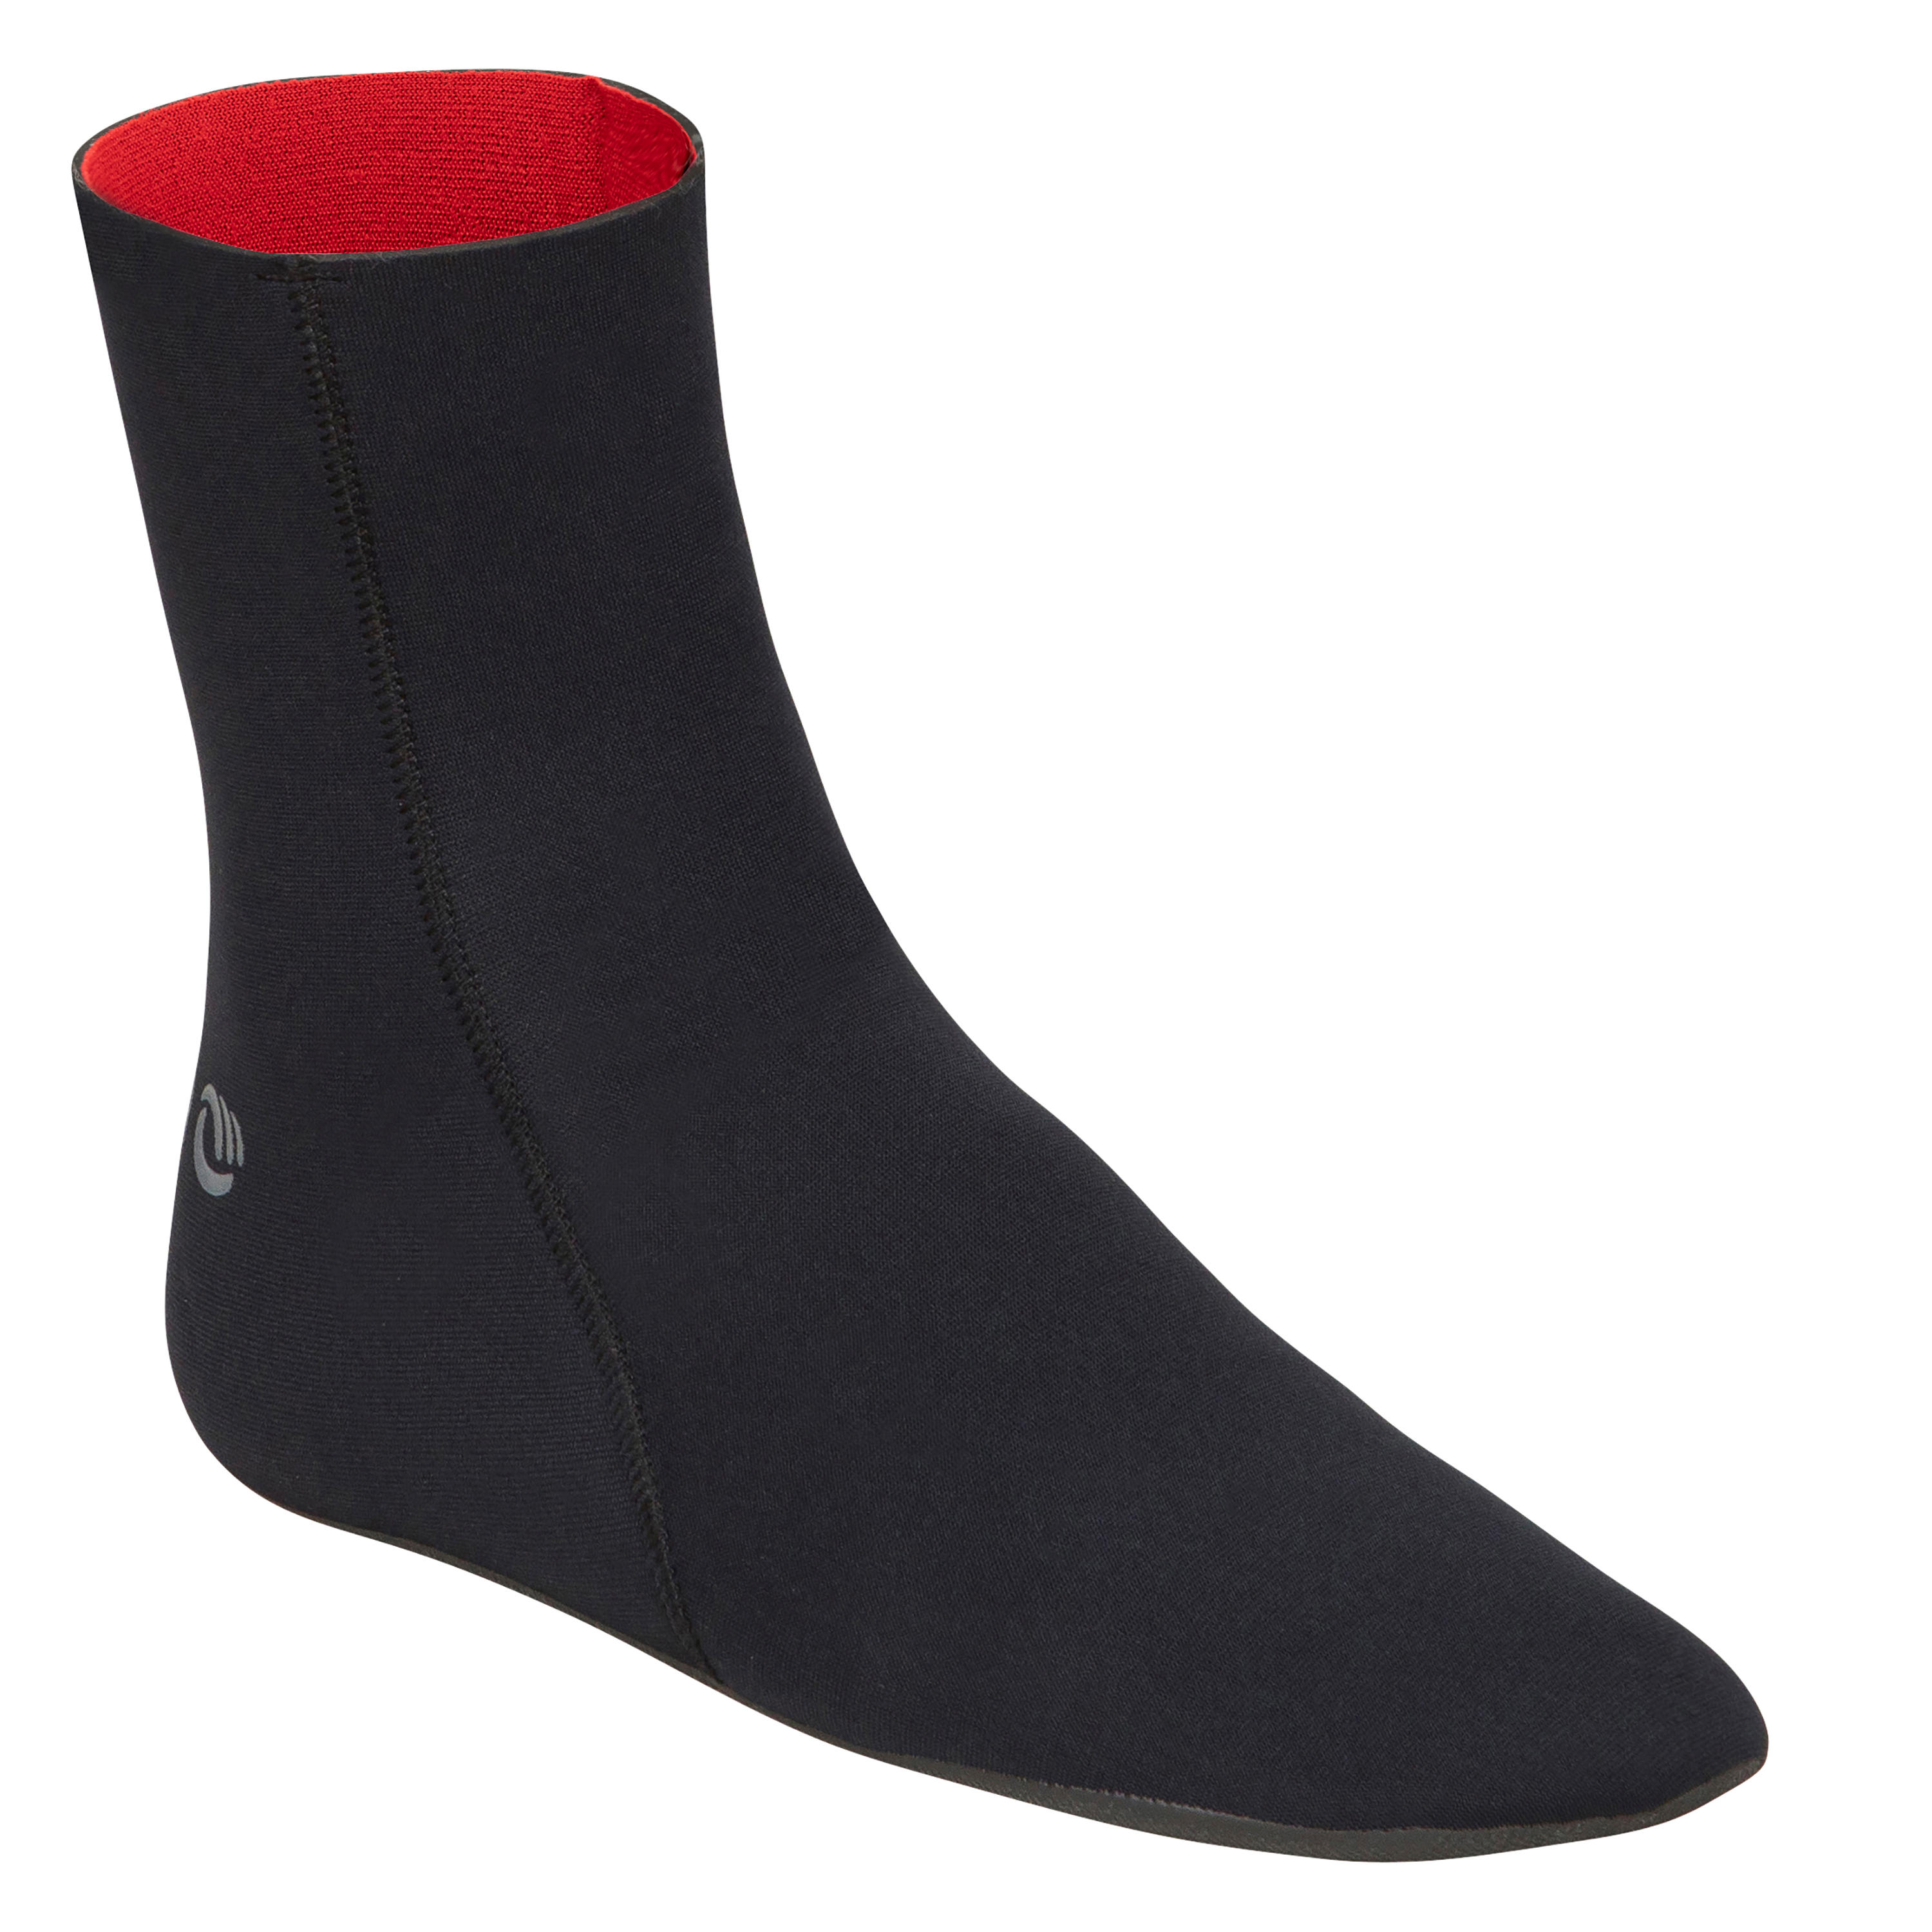 neoprene sock boots